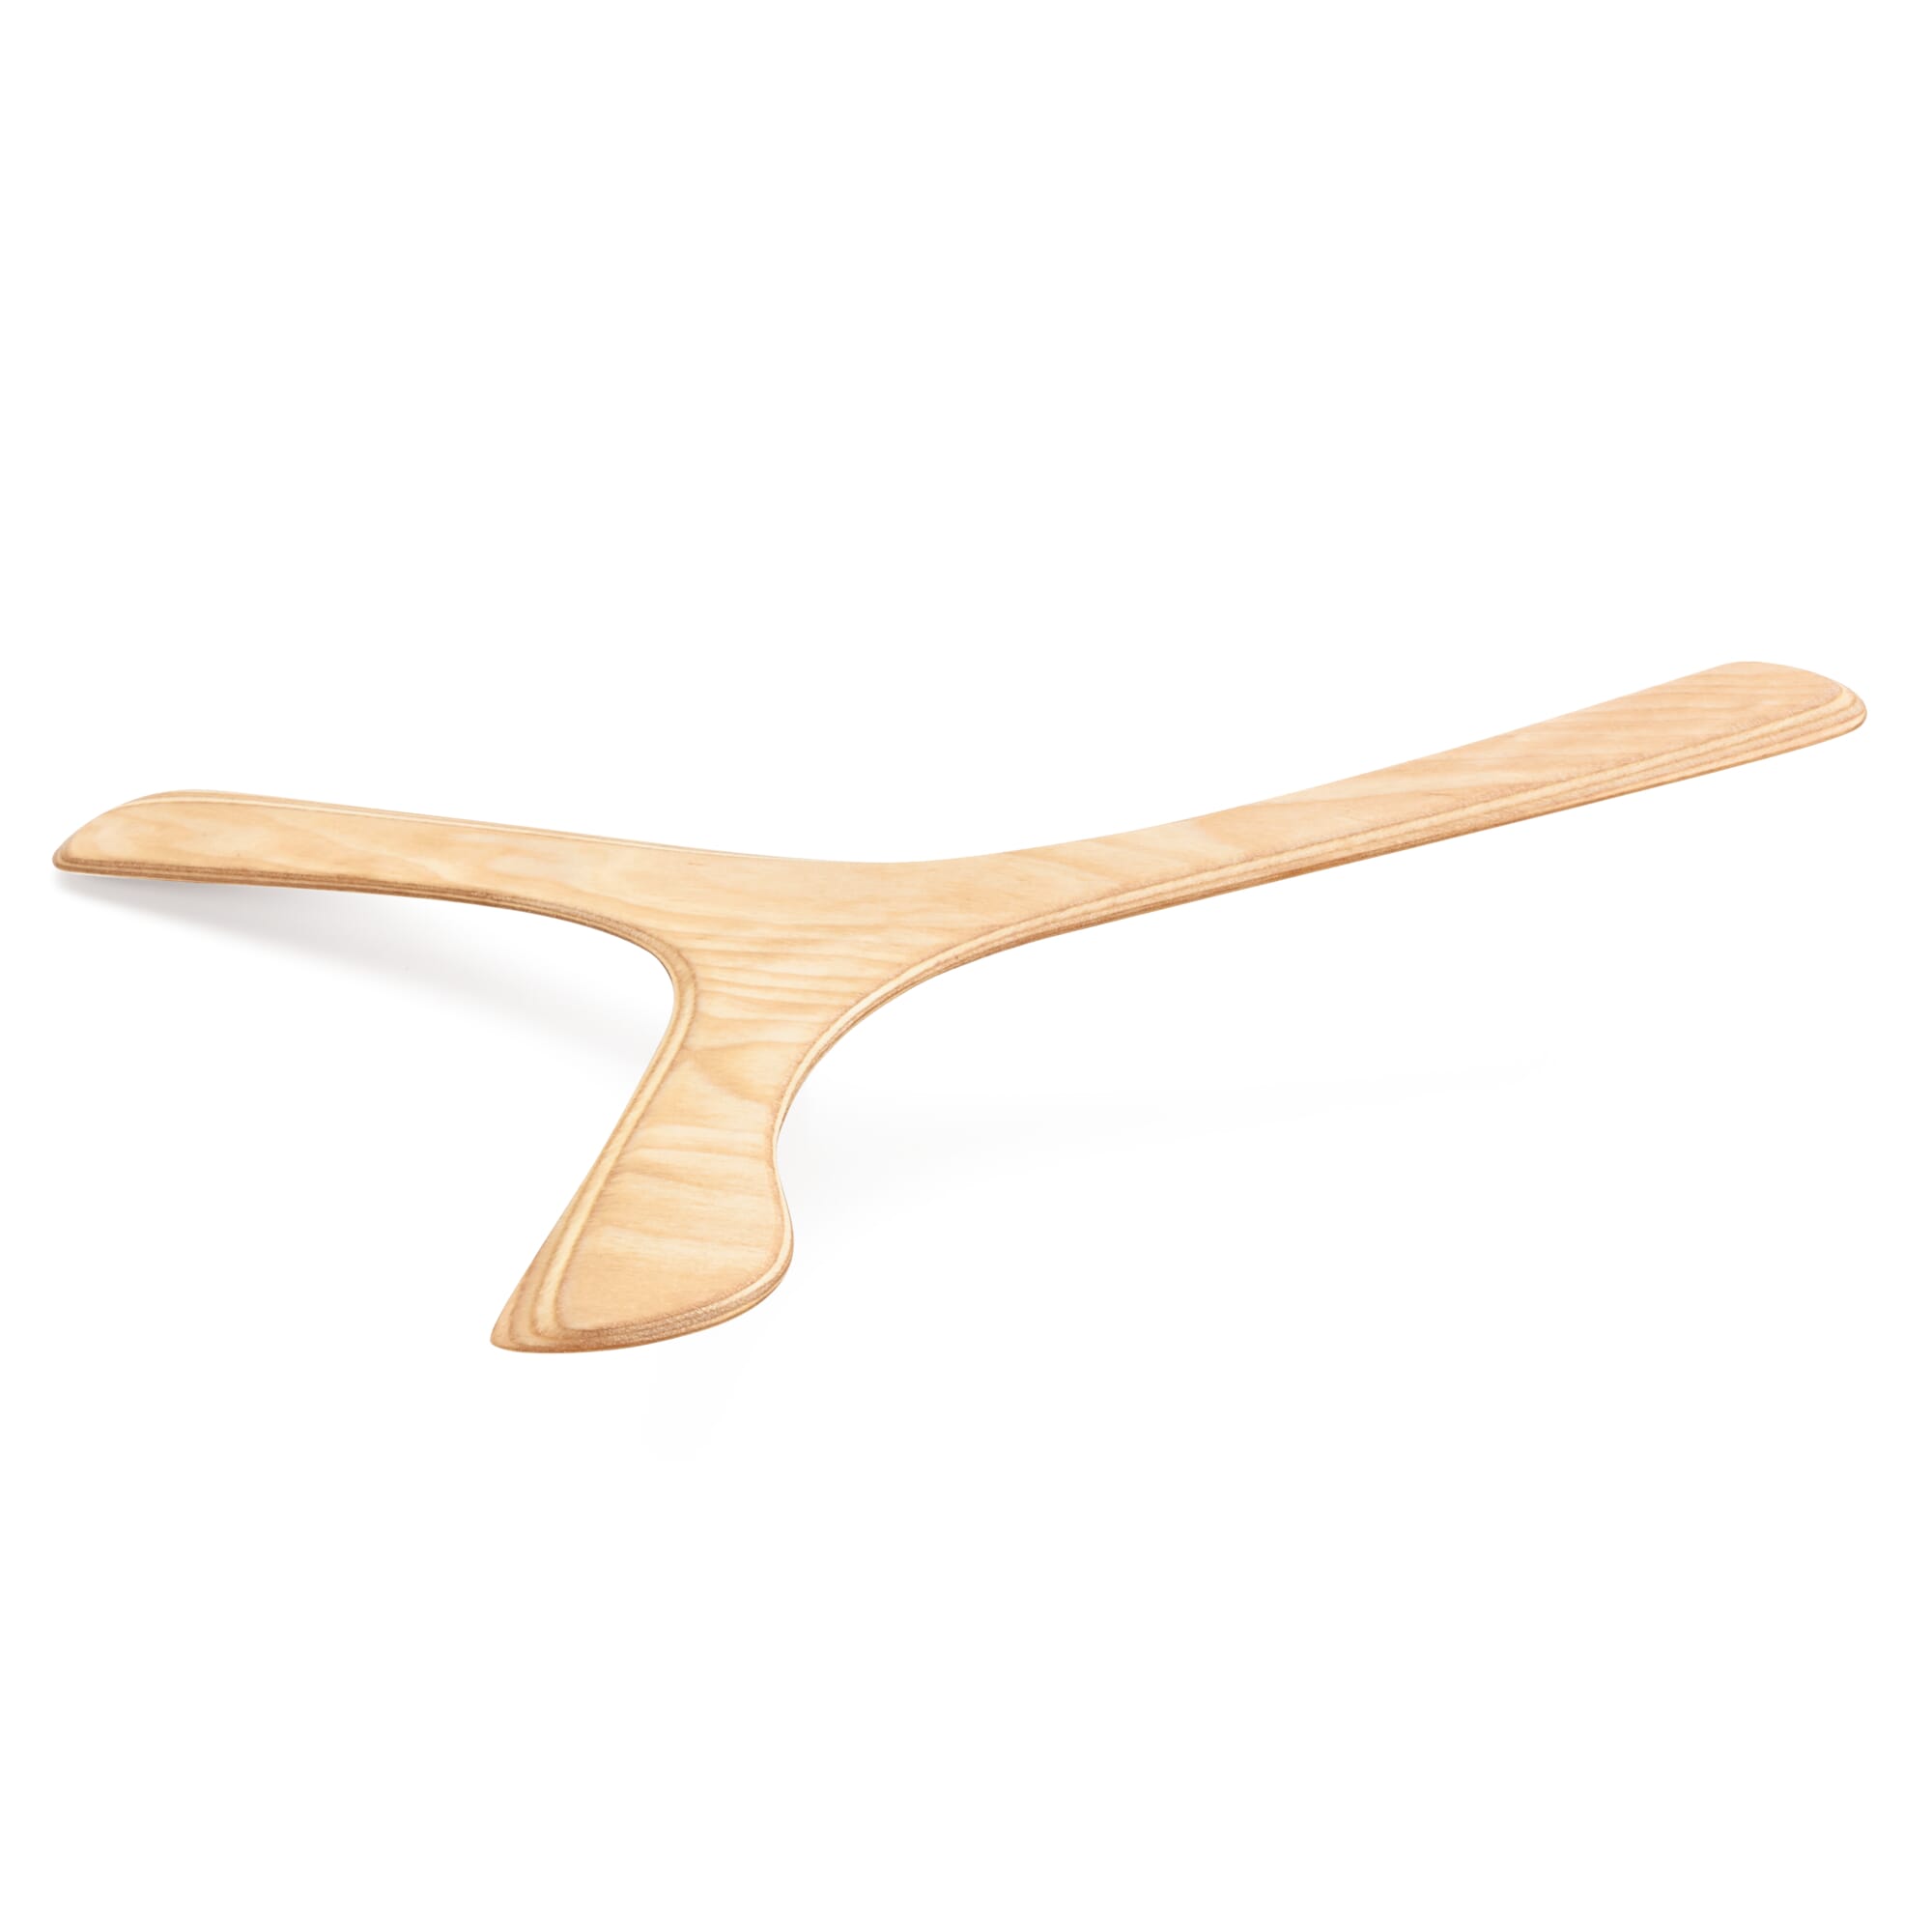 Bumerang flugfähig für Anfänger o Kinder Australien 6 schicht Holz 